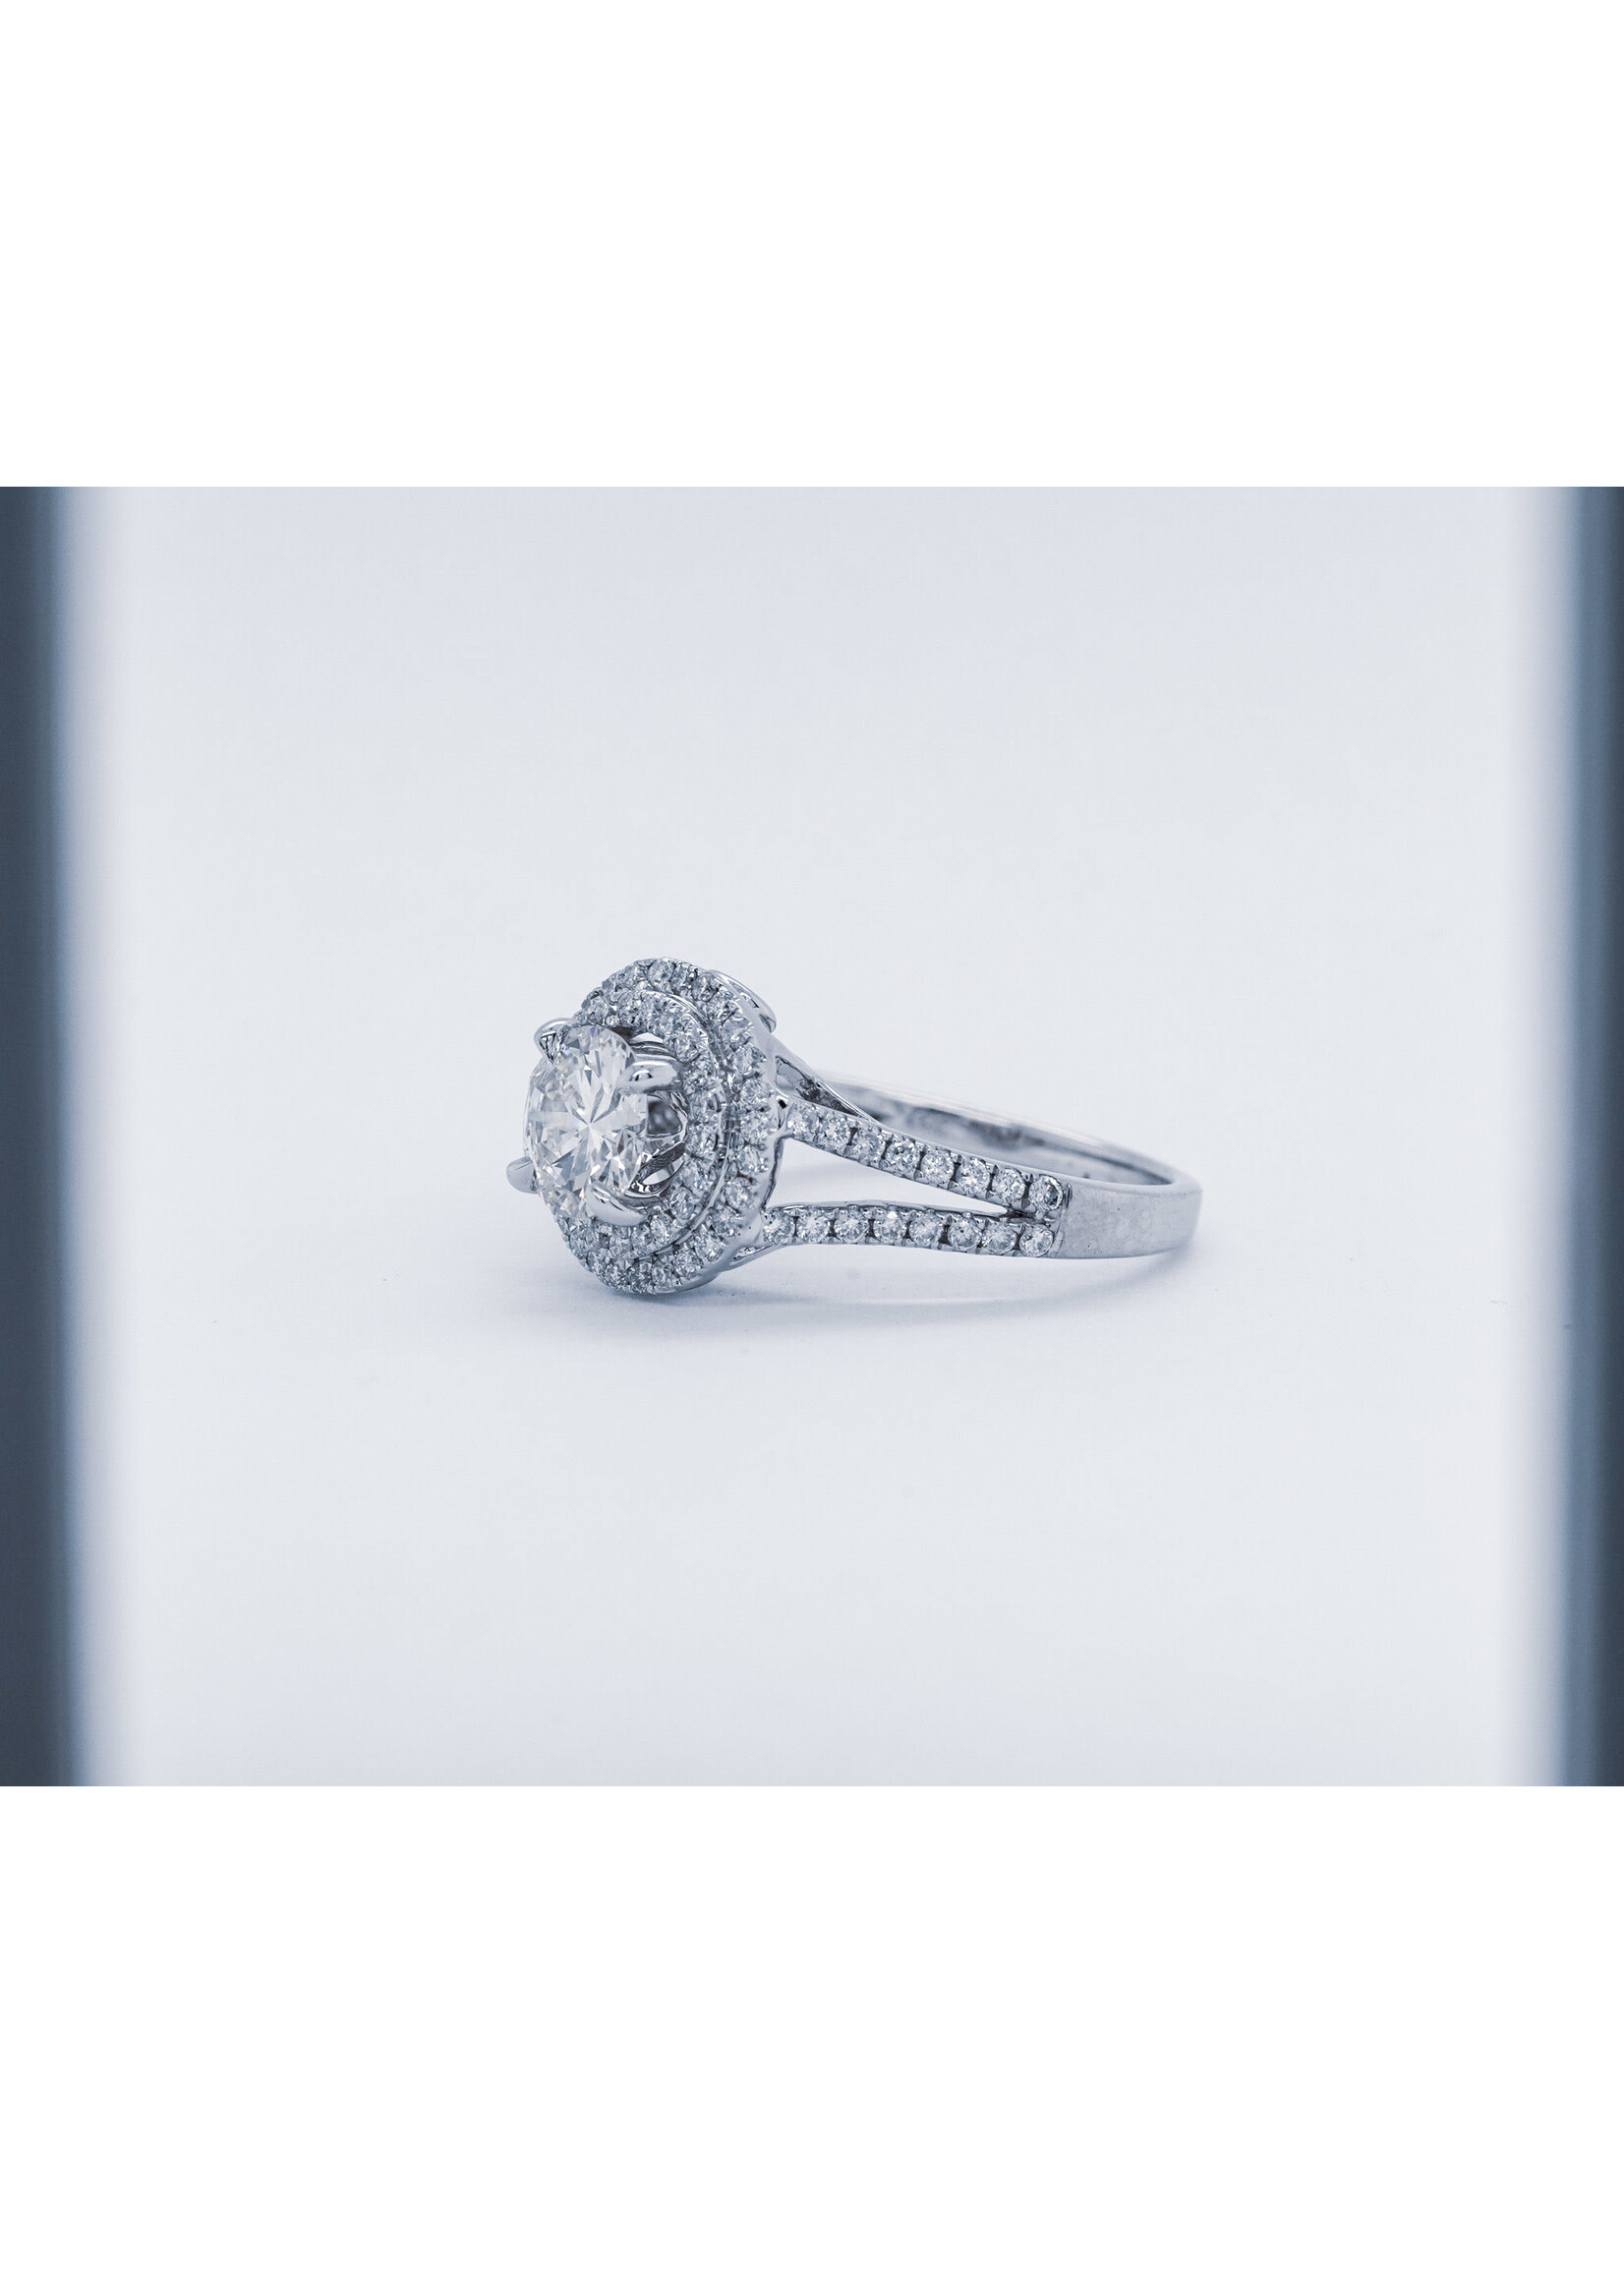 14KW 3.66g 1.55TW (.85ctr) J/VS2 Old European Diamond Double Halo Engagement Ring (size 6)